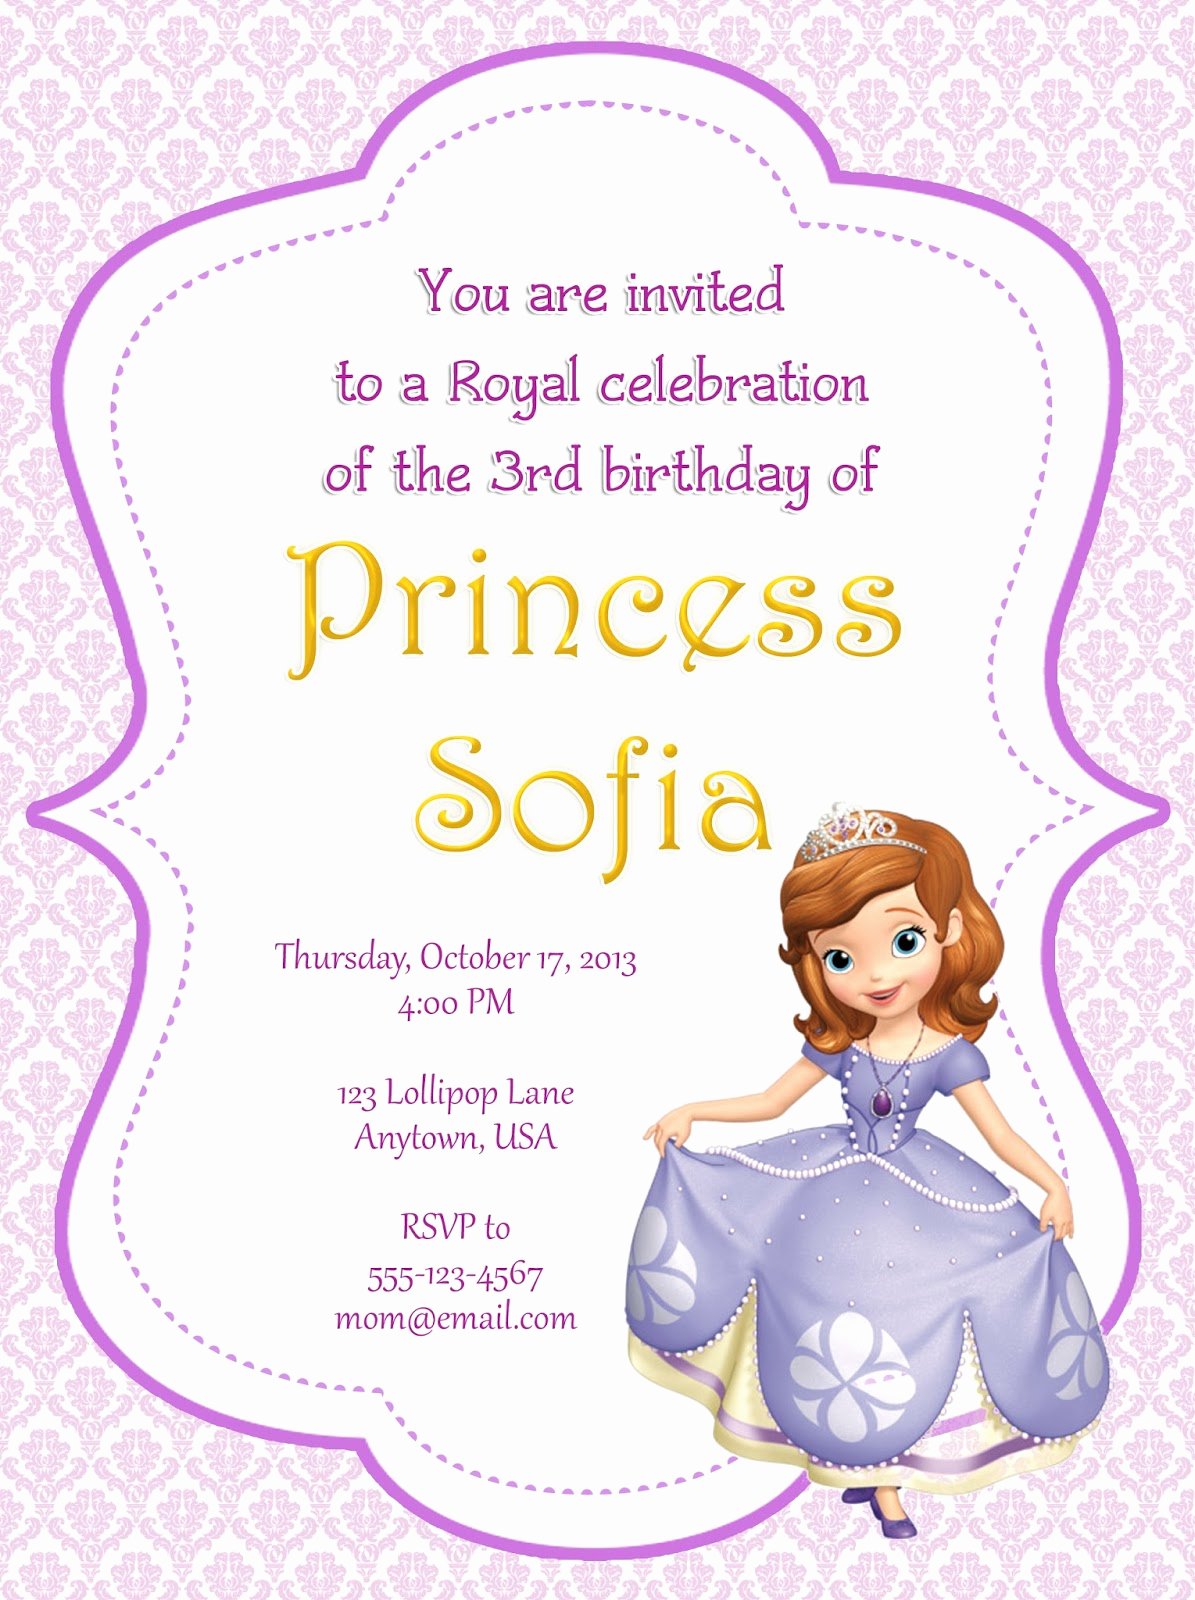 Sofia the First Invitation Templates Luxury I Make I August 2013